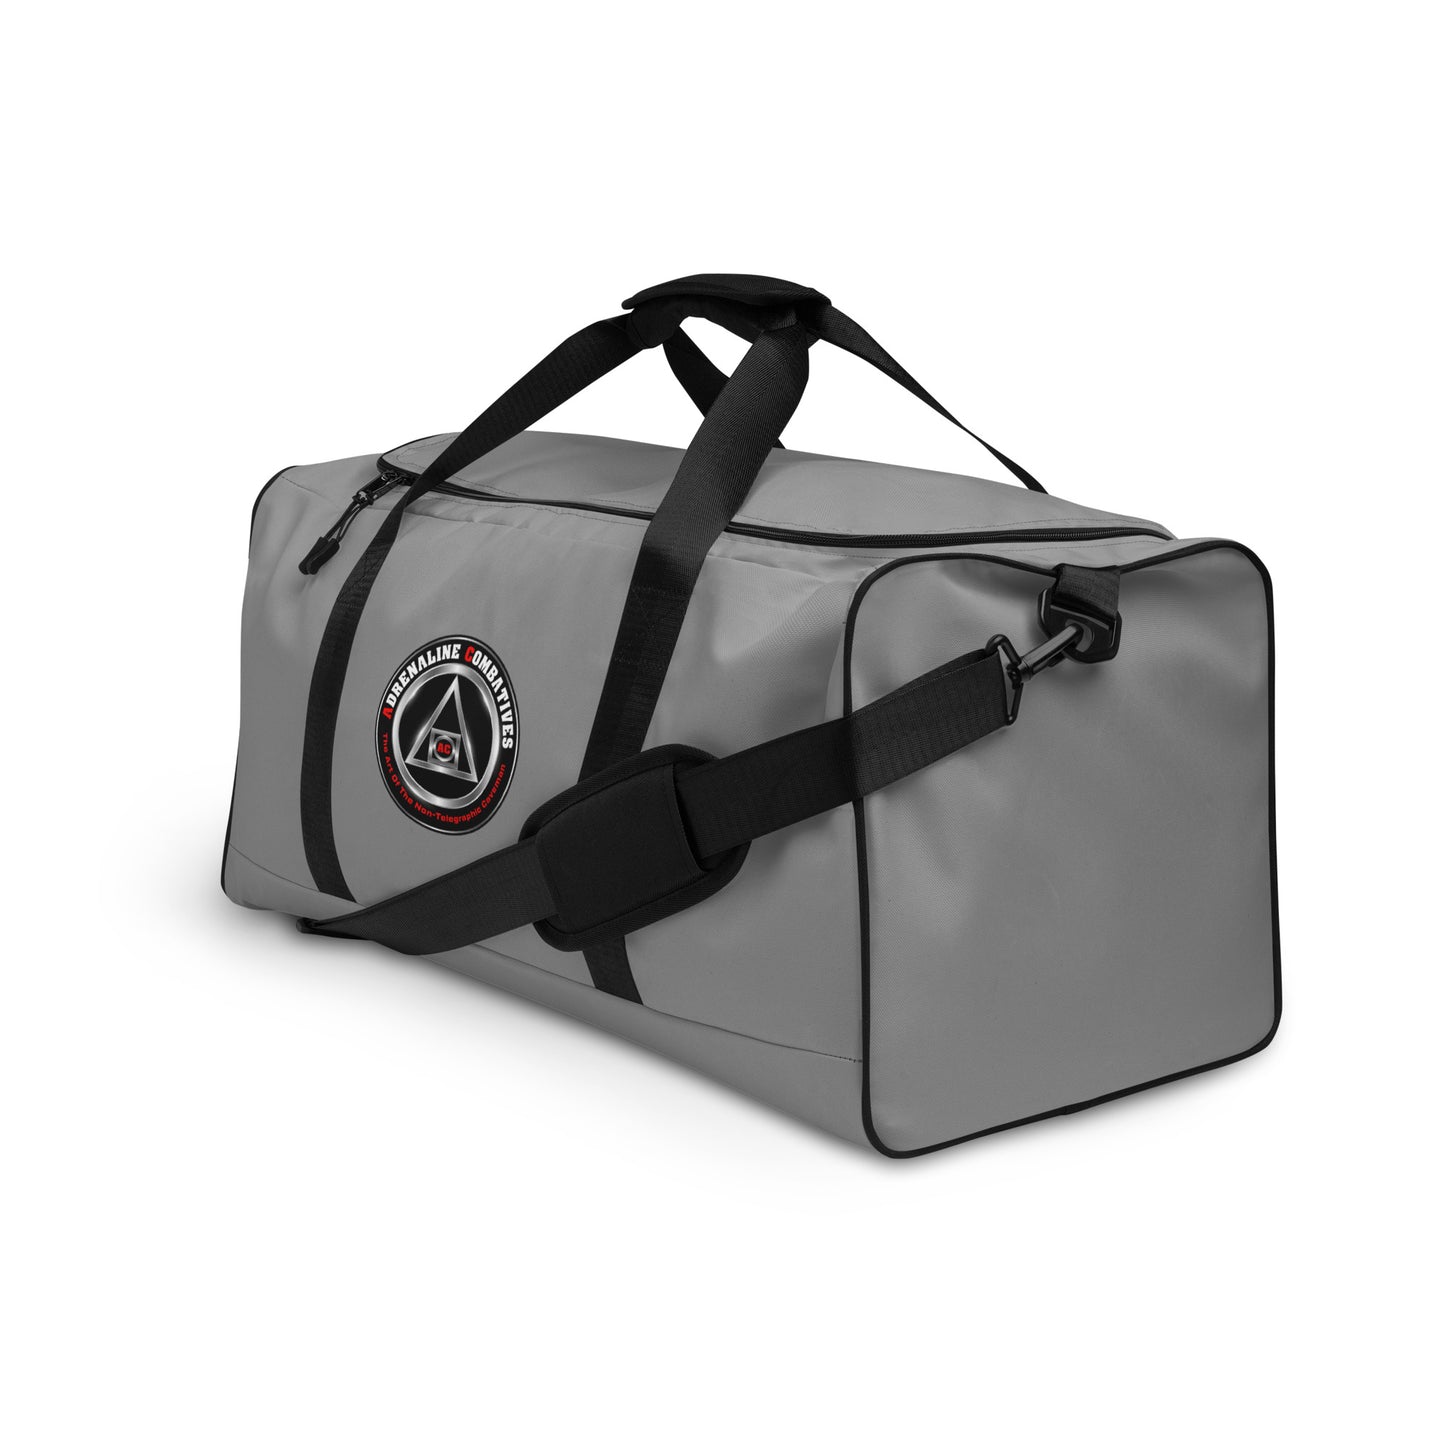 Duffle bag - Grey - Adrenaline Combatives - Logo